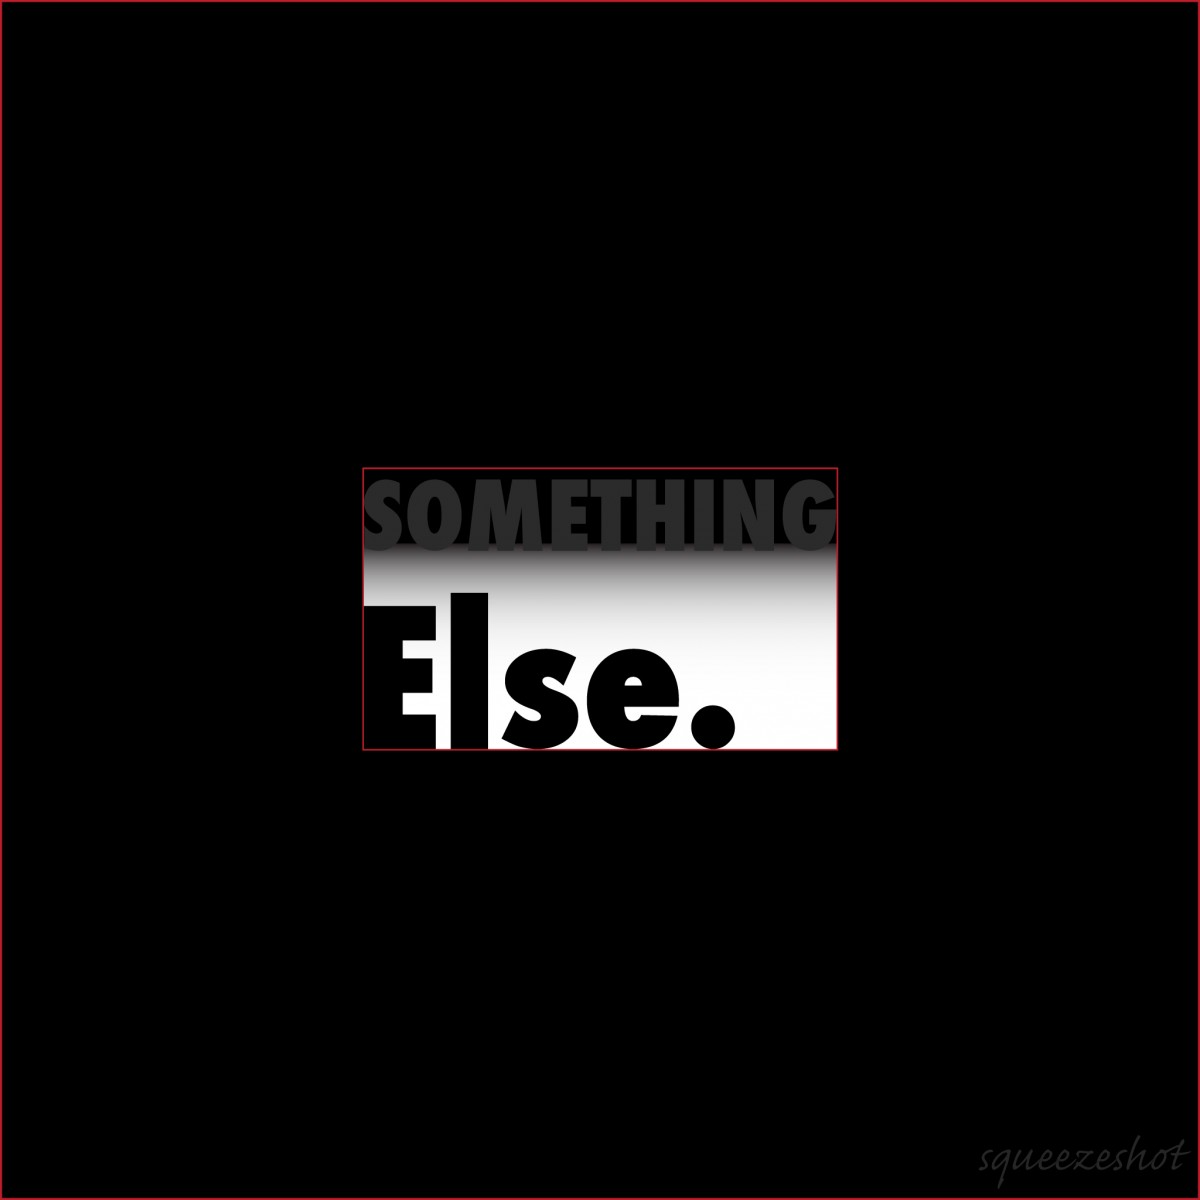 (something) else